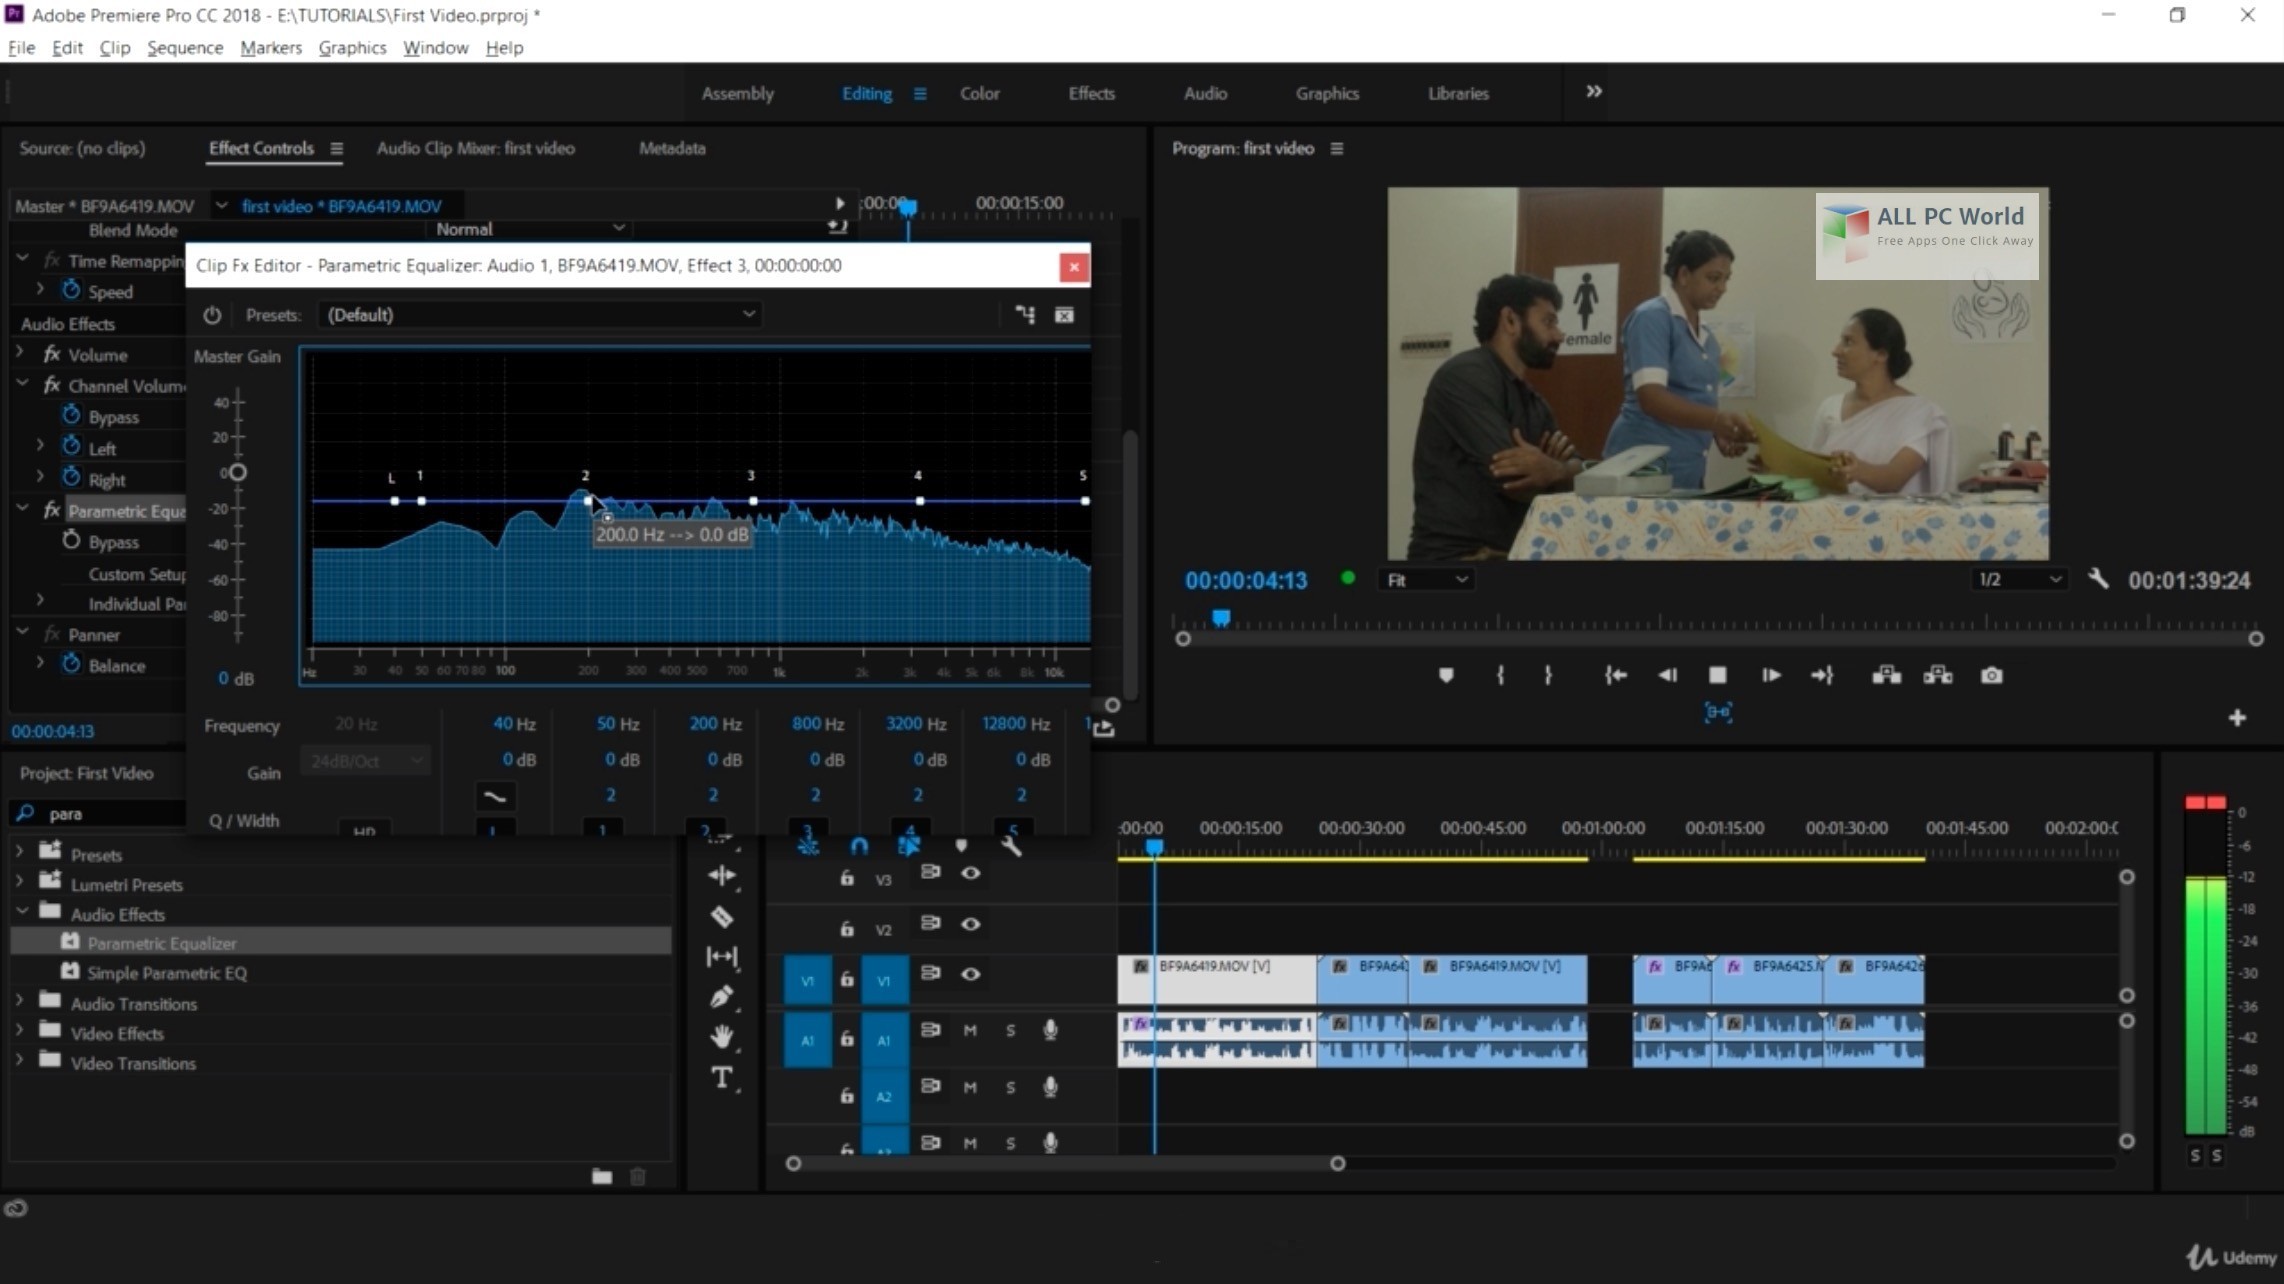 Adobe Premiere Pro CC 2019 v13.1 Free Download - Full Version